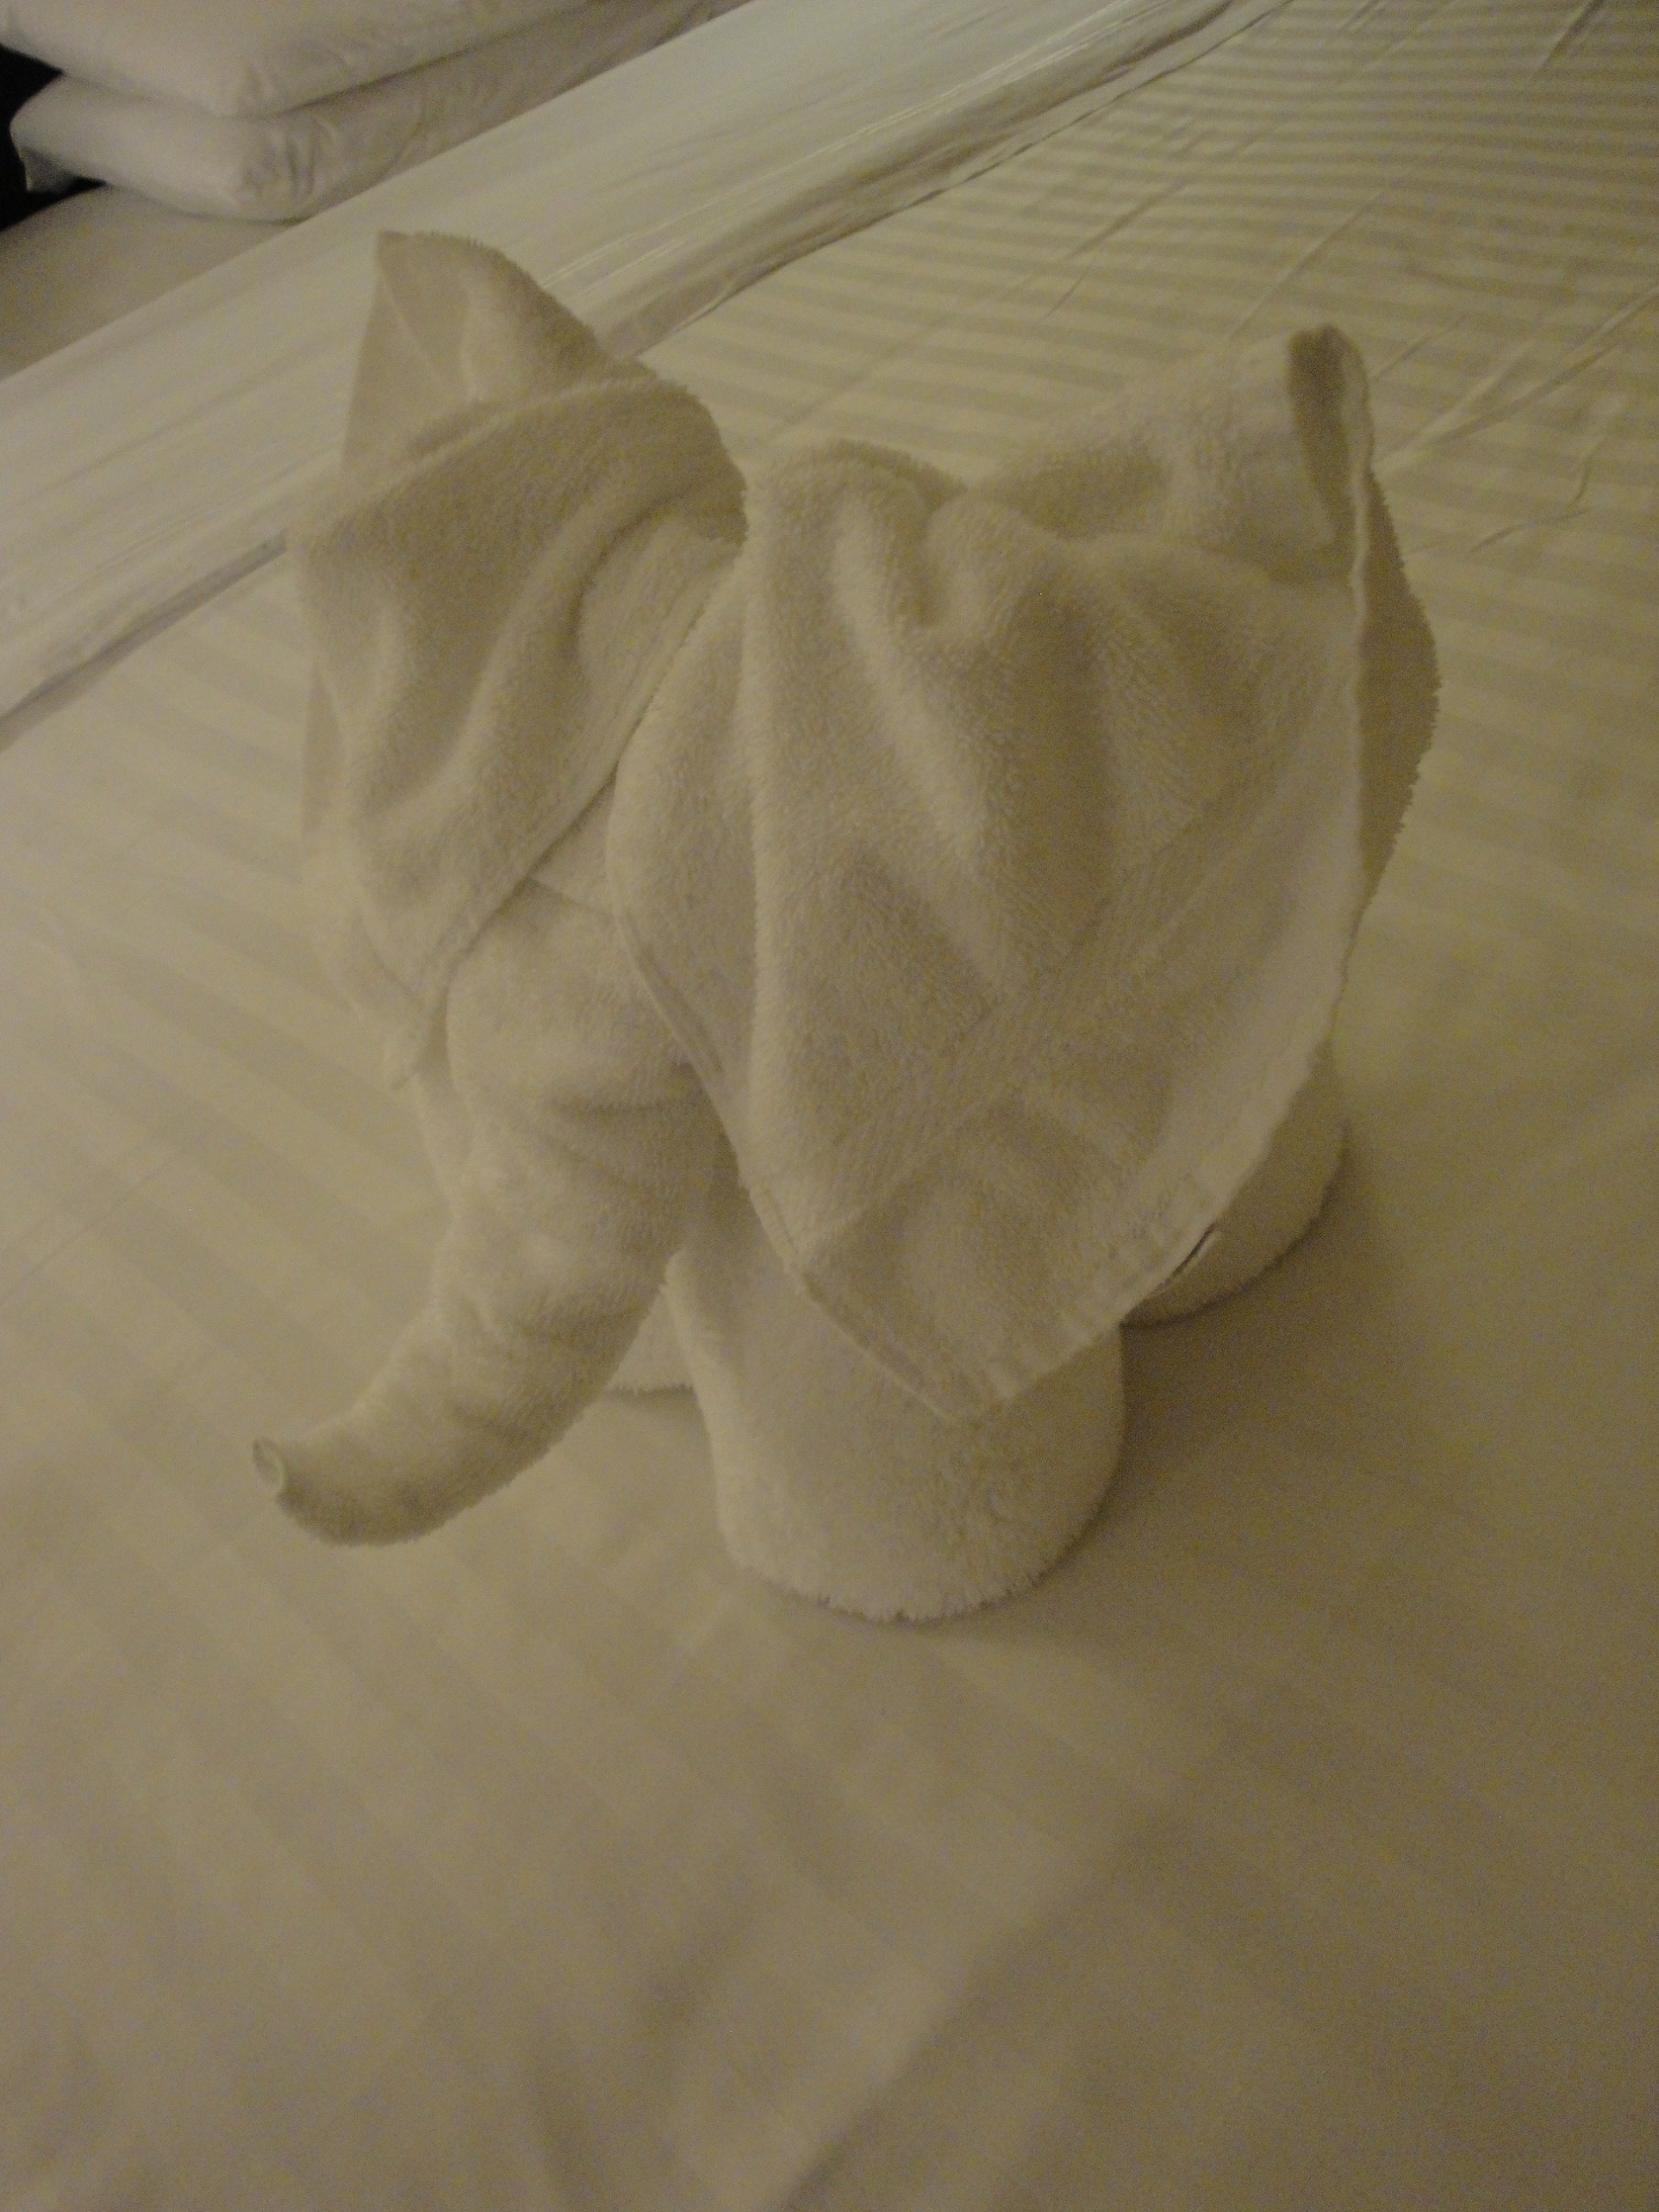 Towel Animals on Royal Caribbean Ships - Elephant